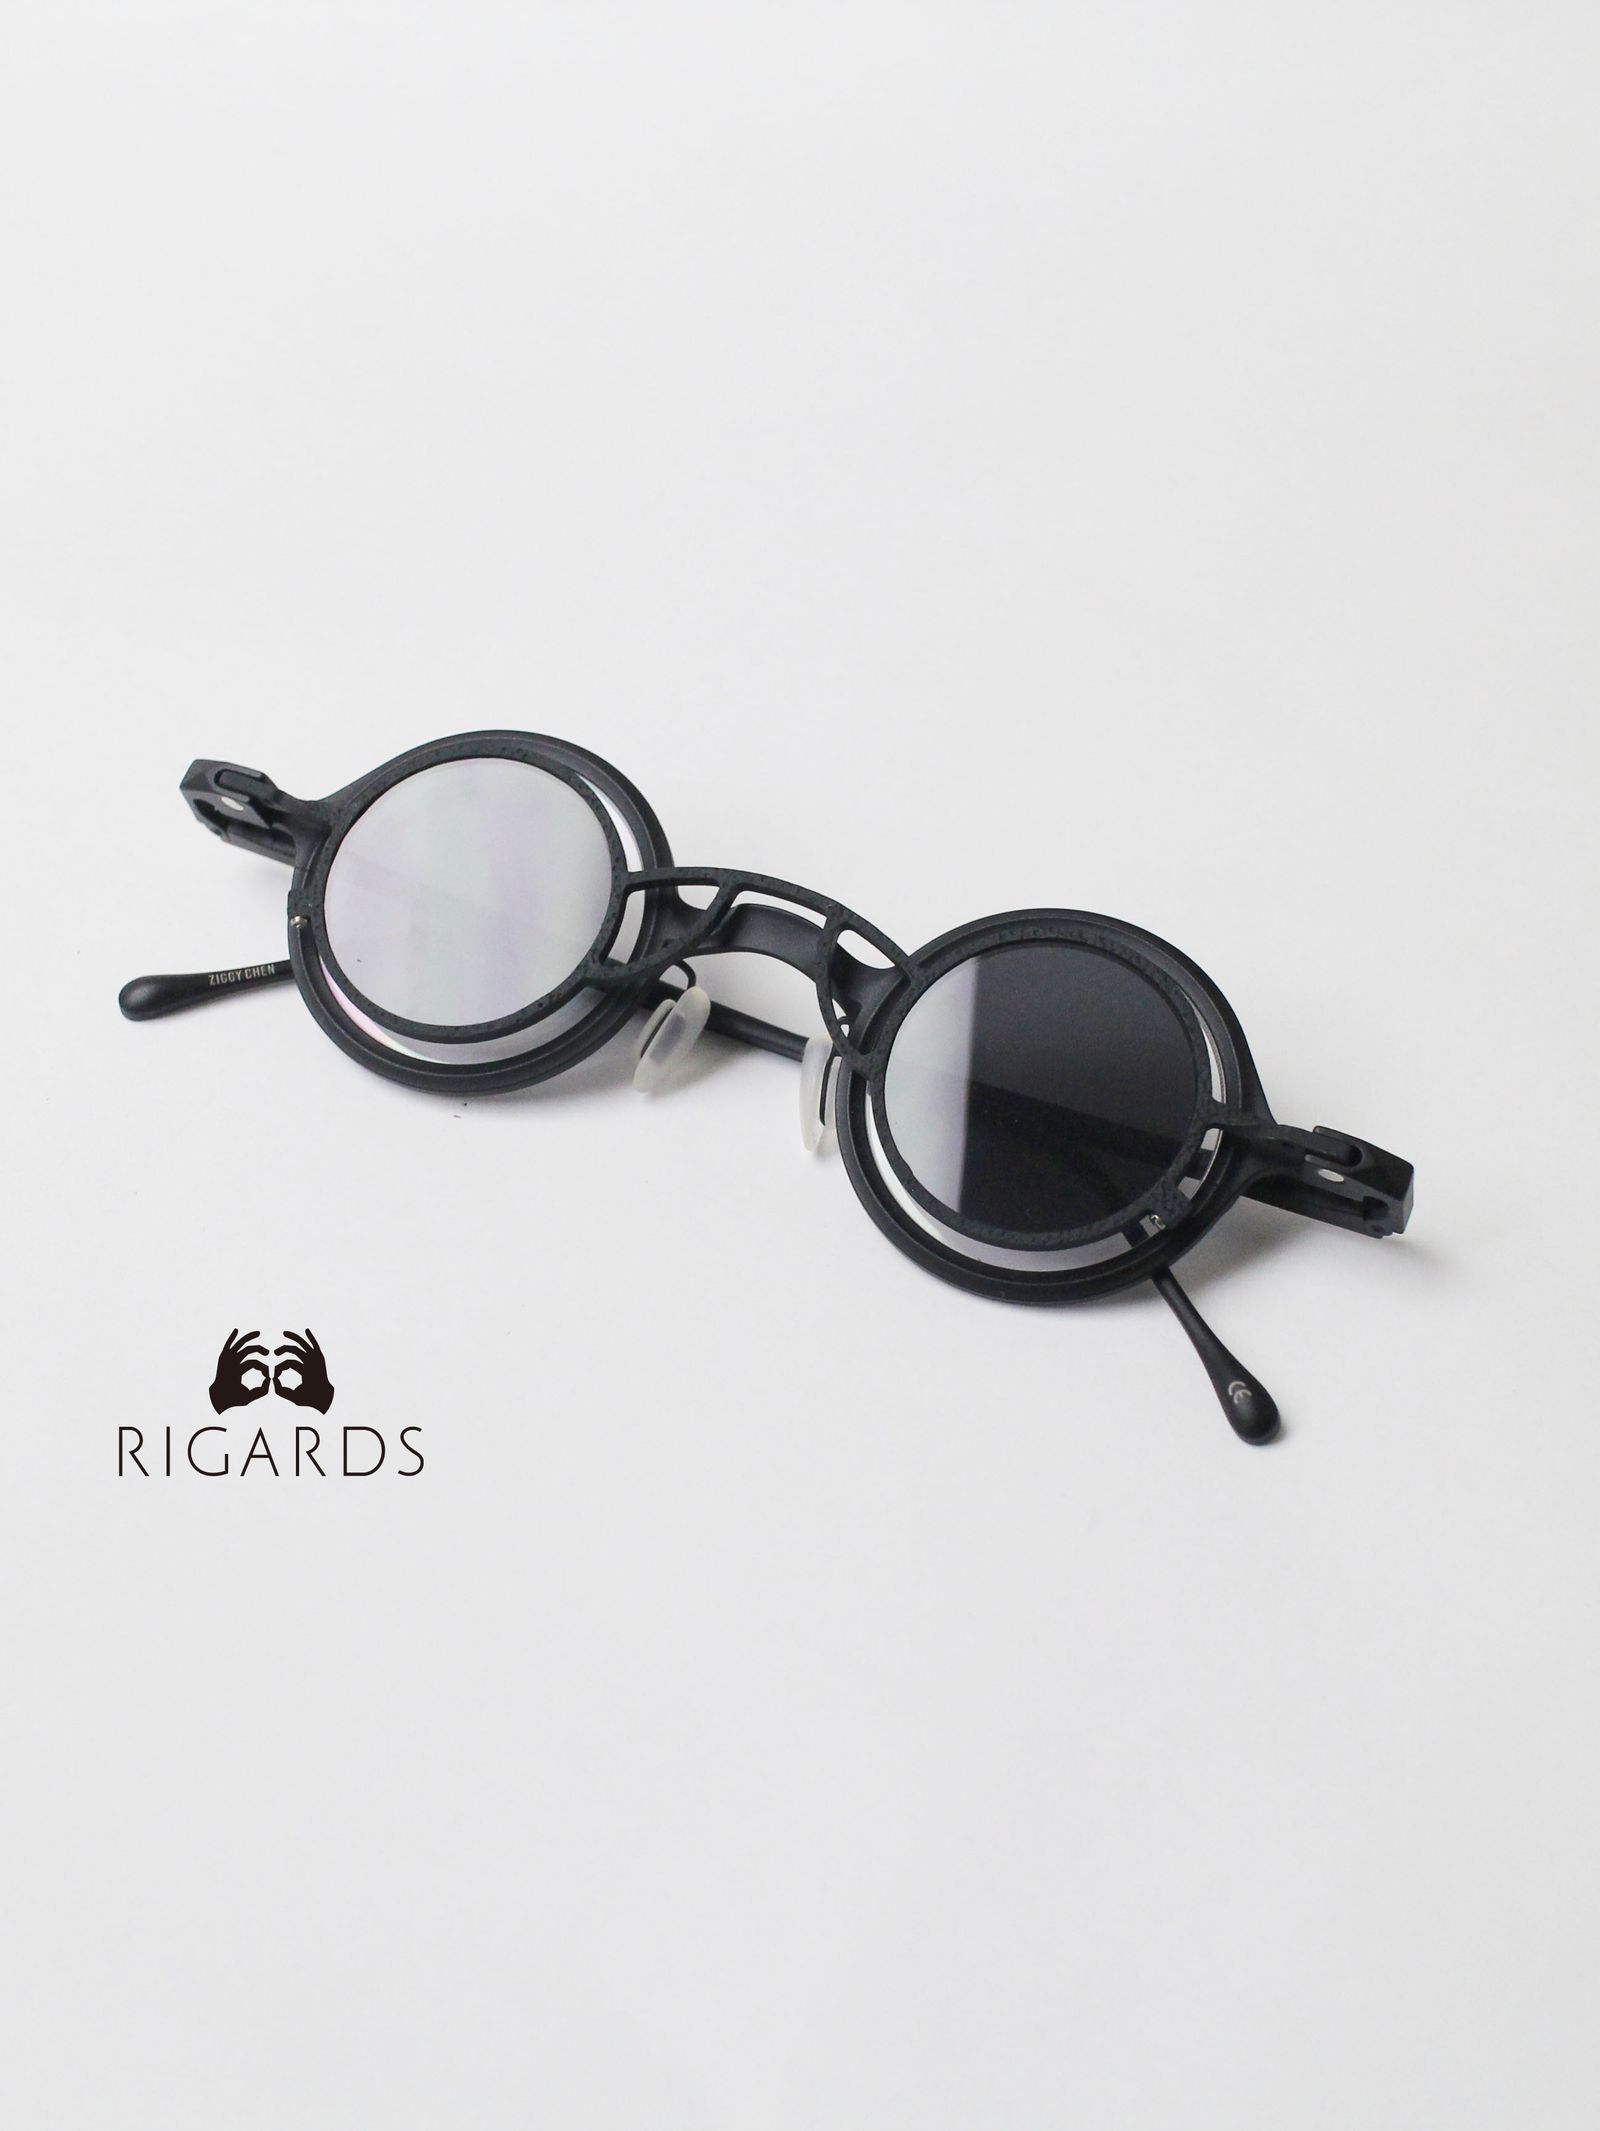 RIGARDS - リガーズ【公式通販 メガネ・サングラス】 ADDICT